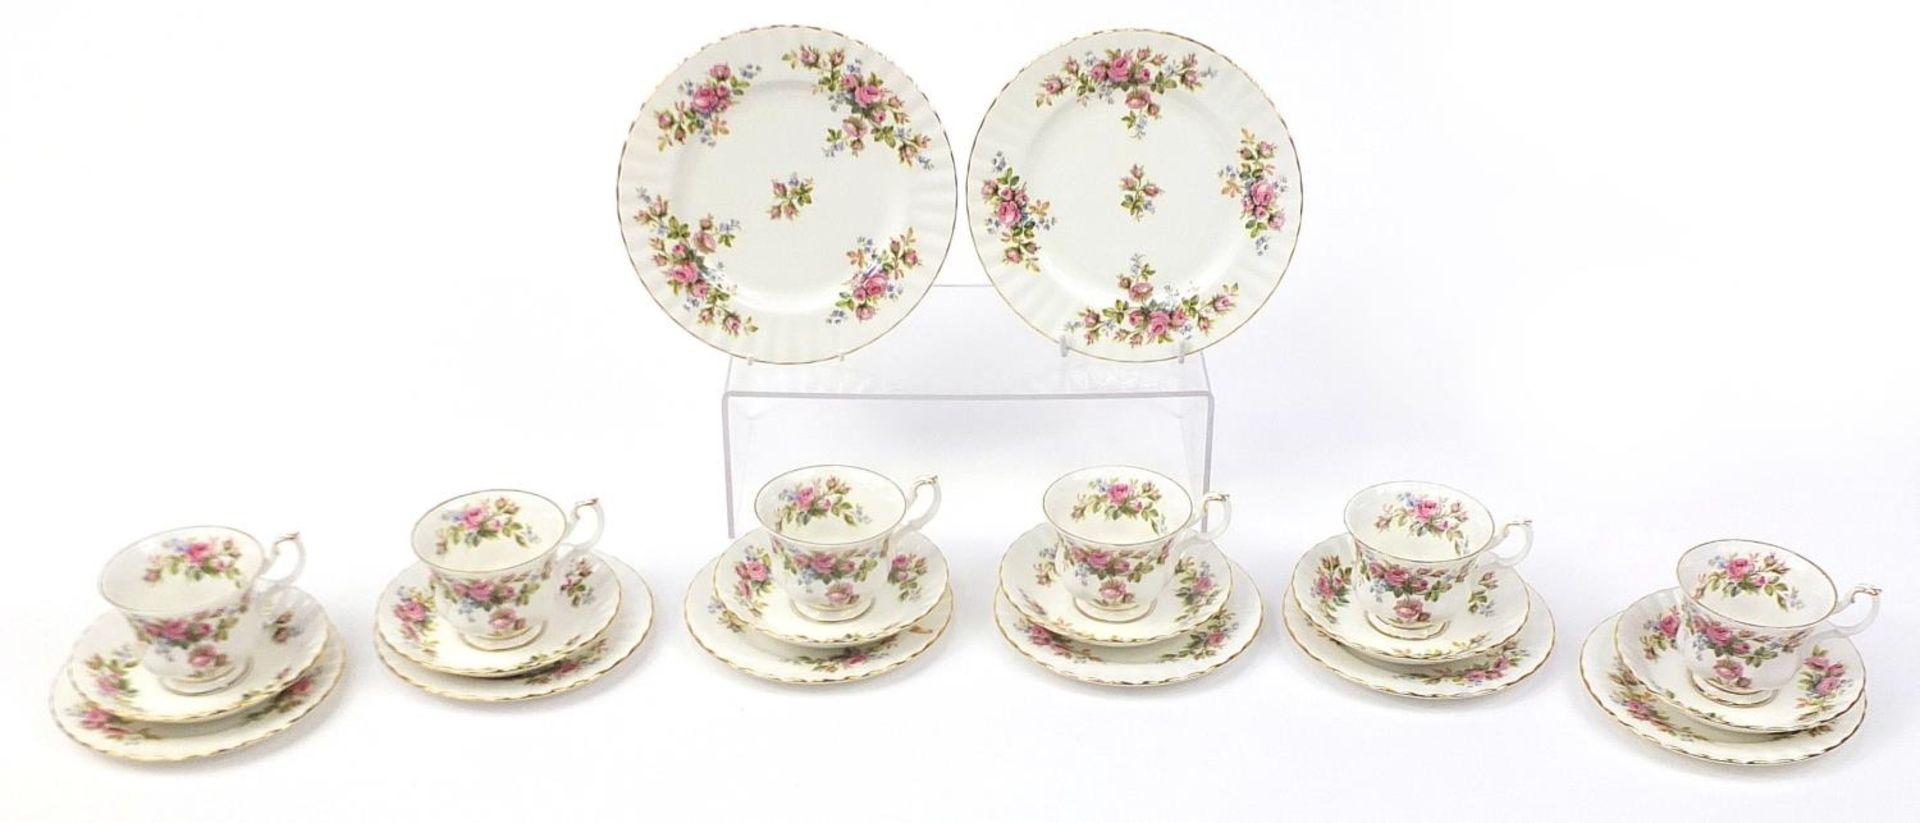 Royal Albert Moss Rose teaware including six trios, the largest each 22.5cm in diameter